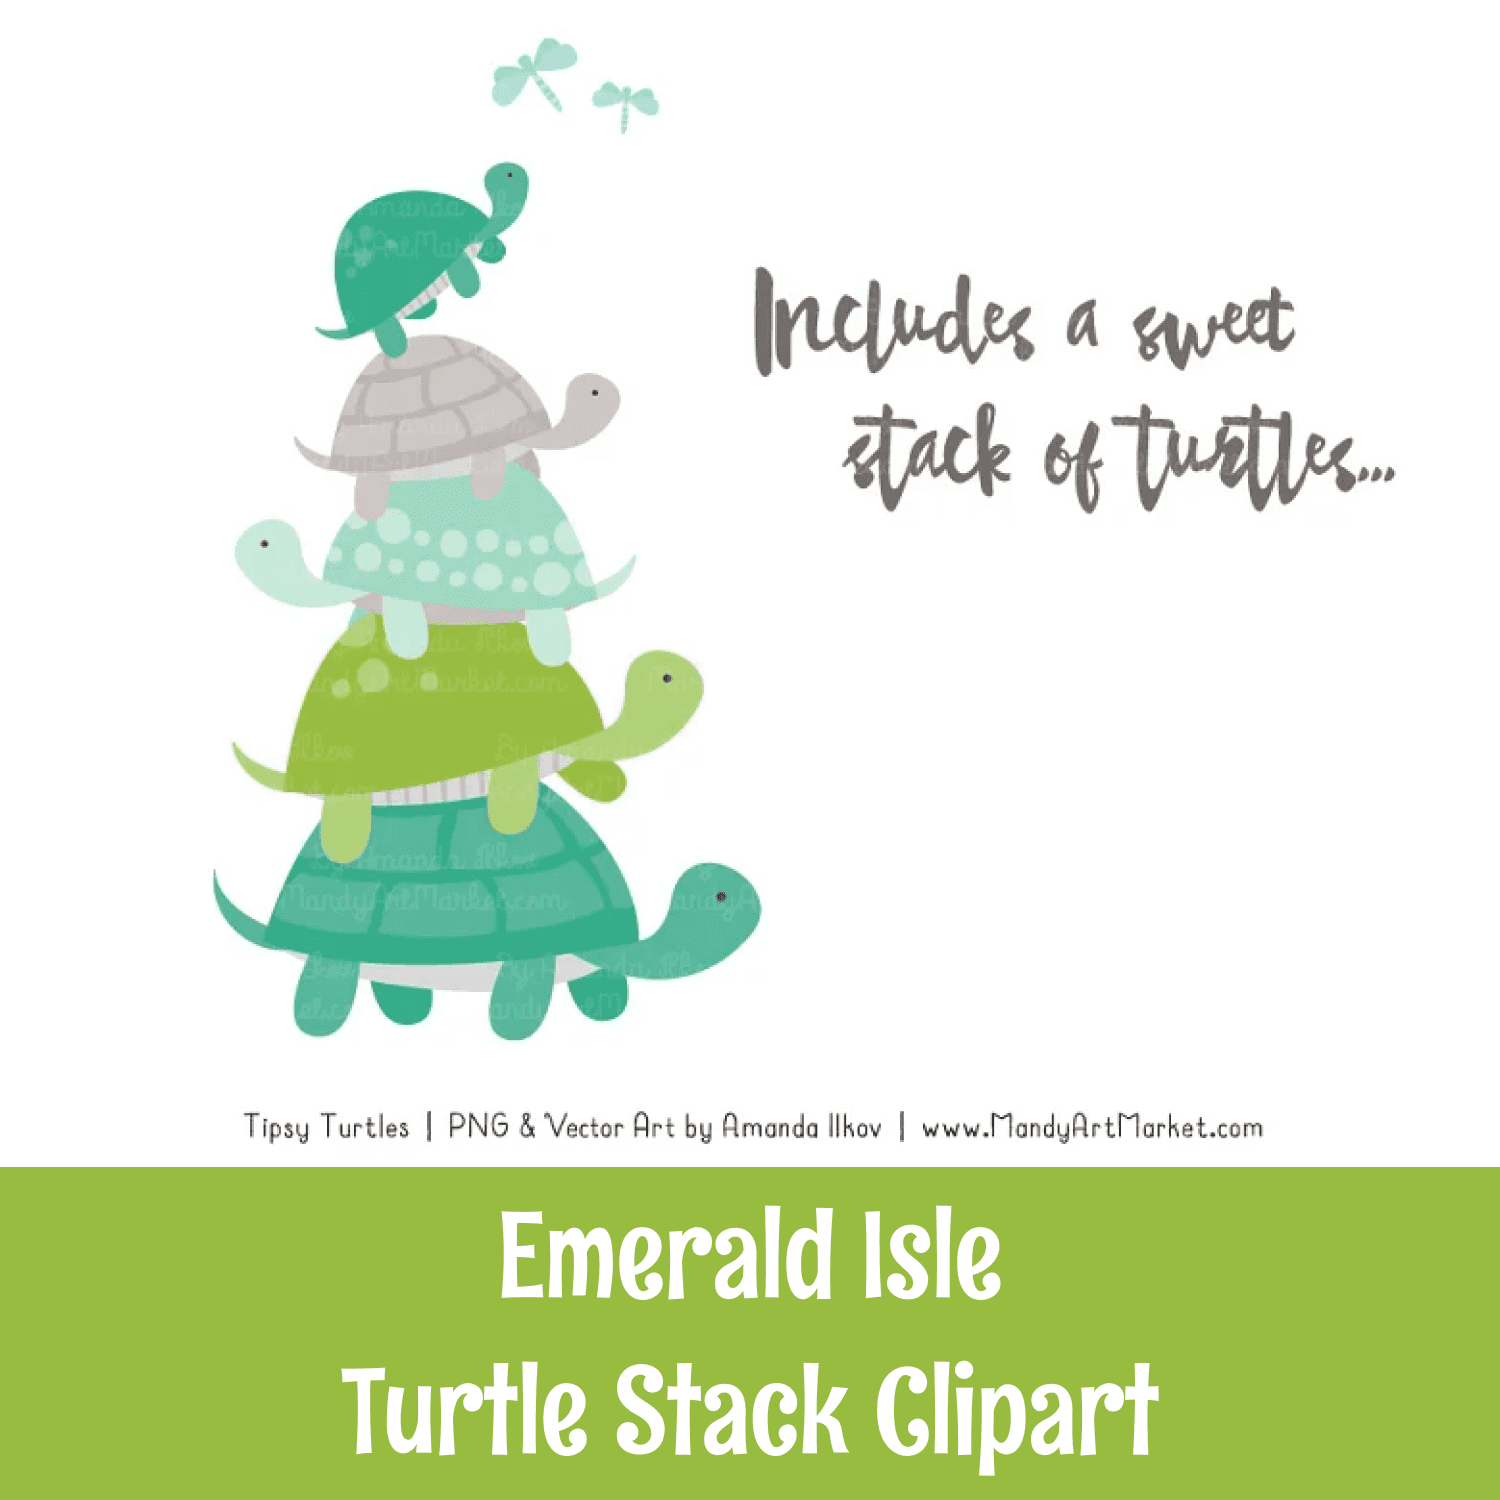 Emerald Isle Turtle Stack Clipart cover.